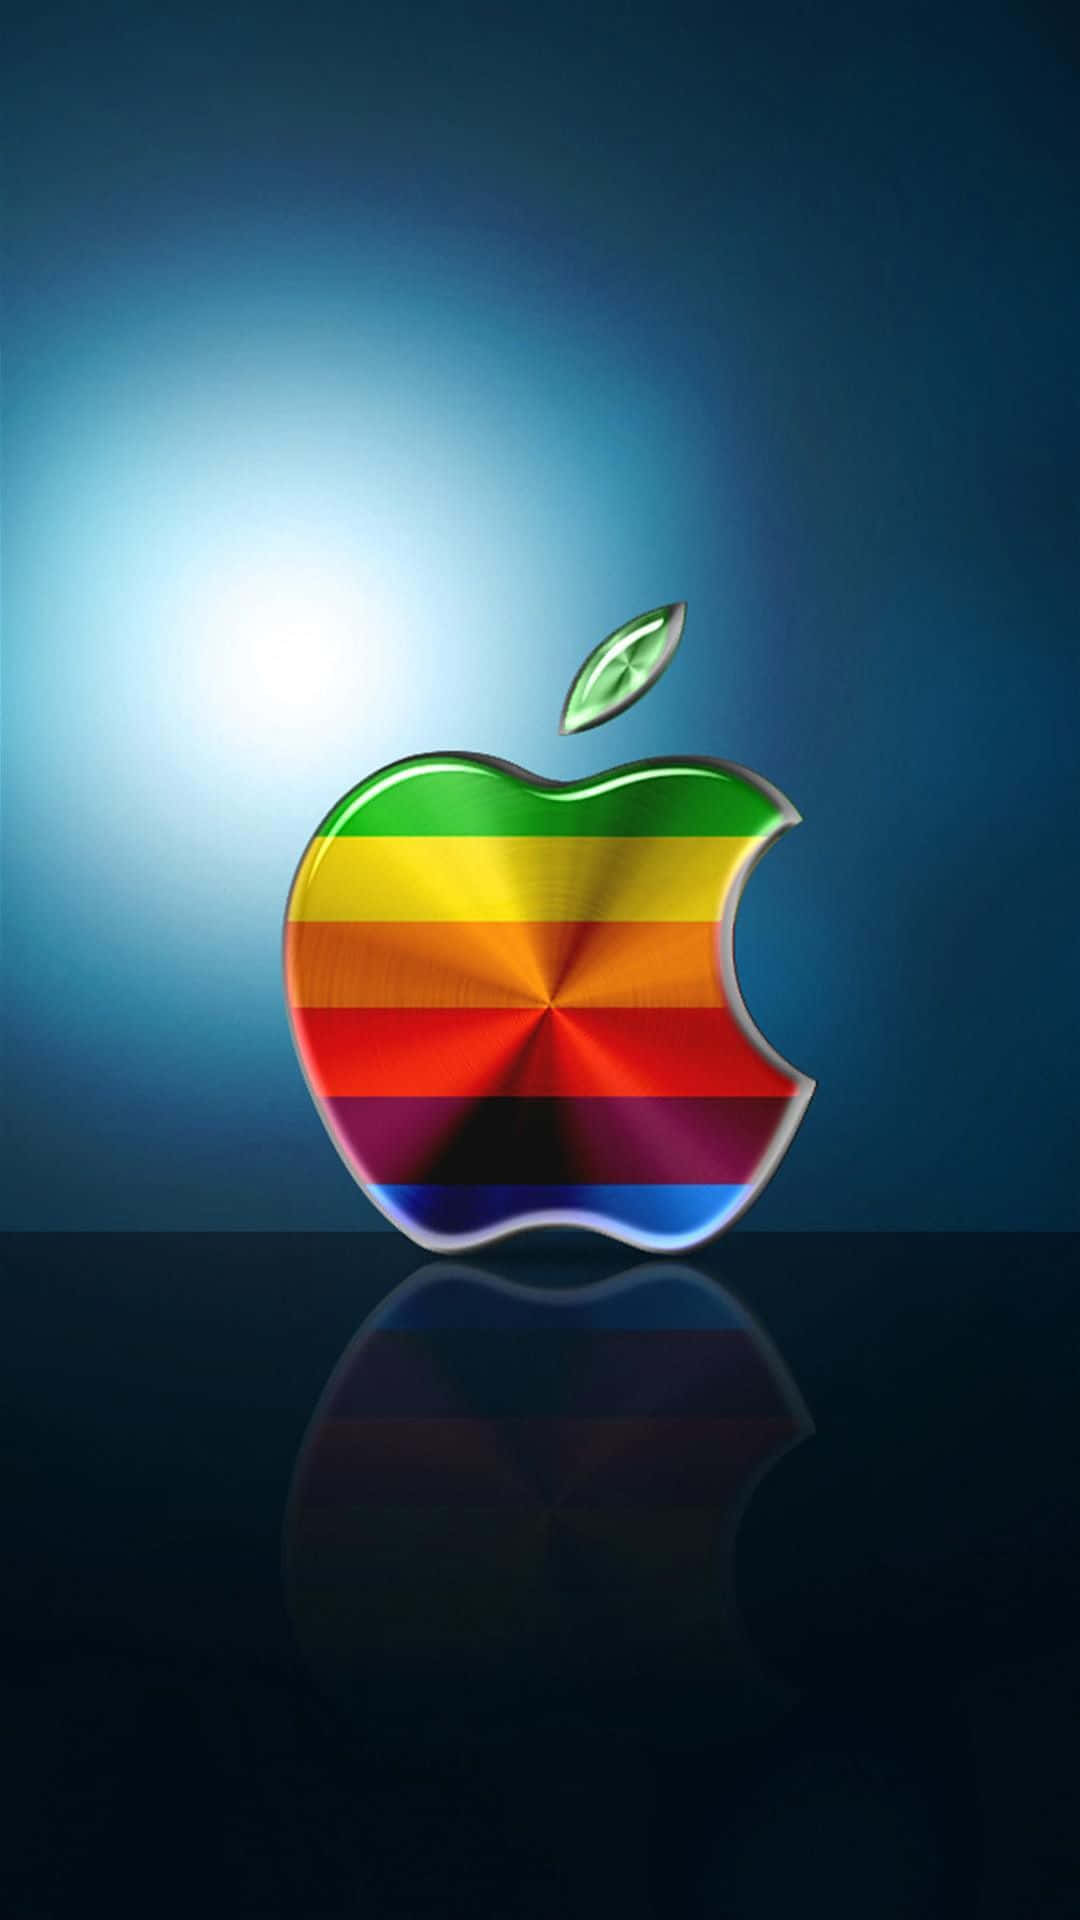 Sfondopixel 3 Con Logo Apple Arcobaleno.